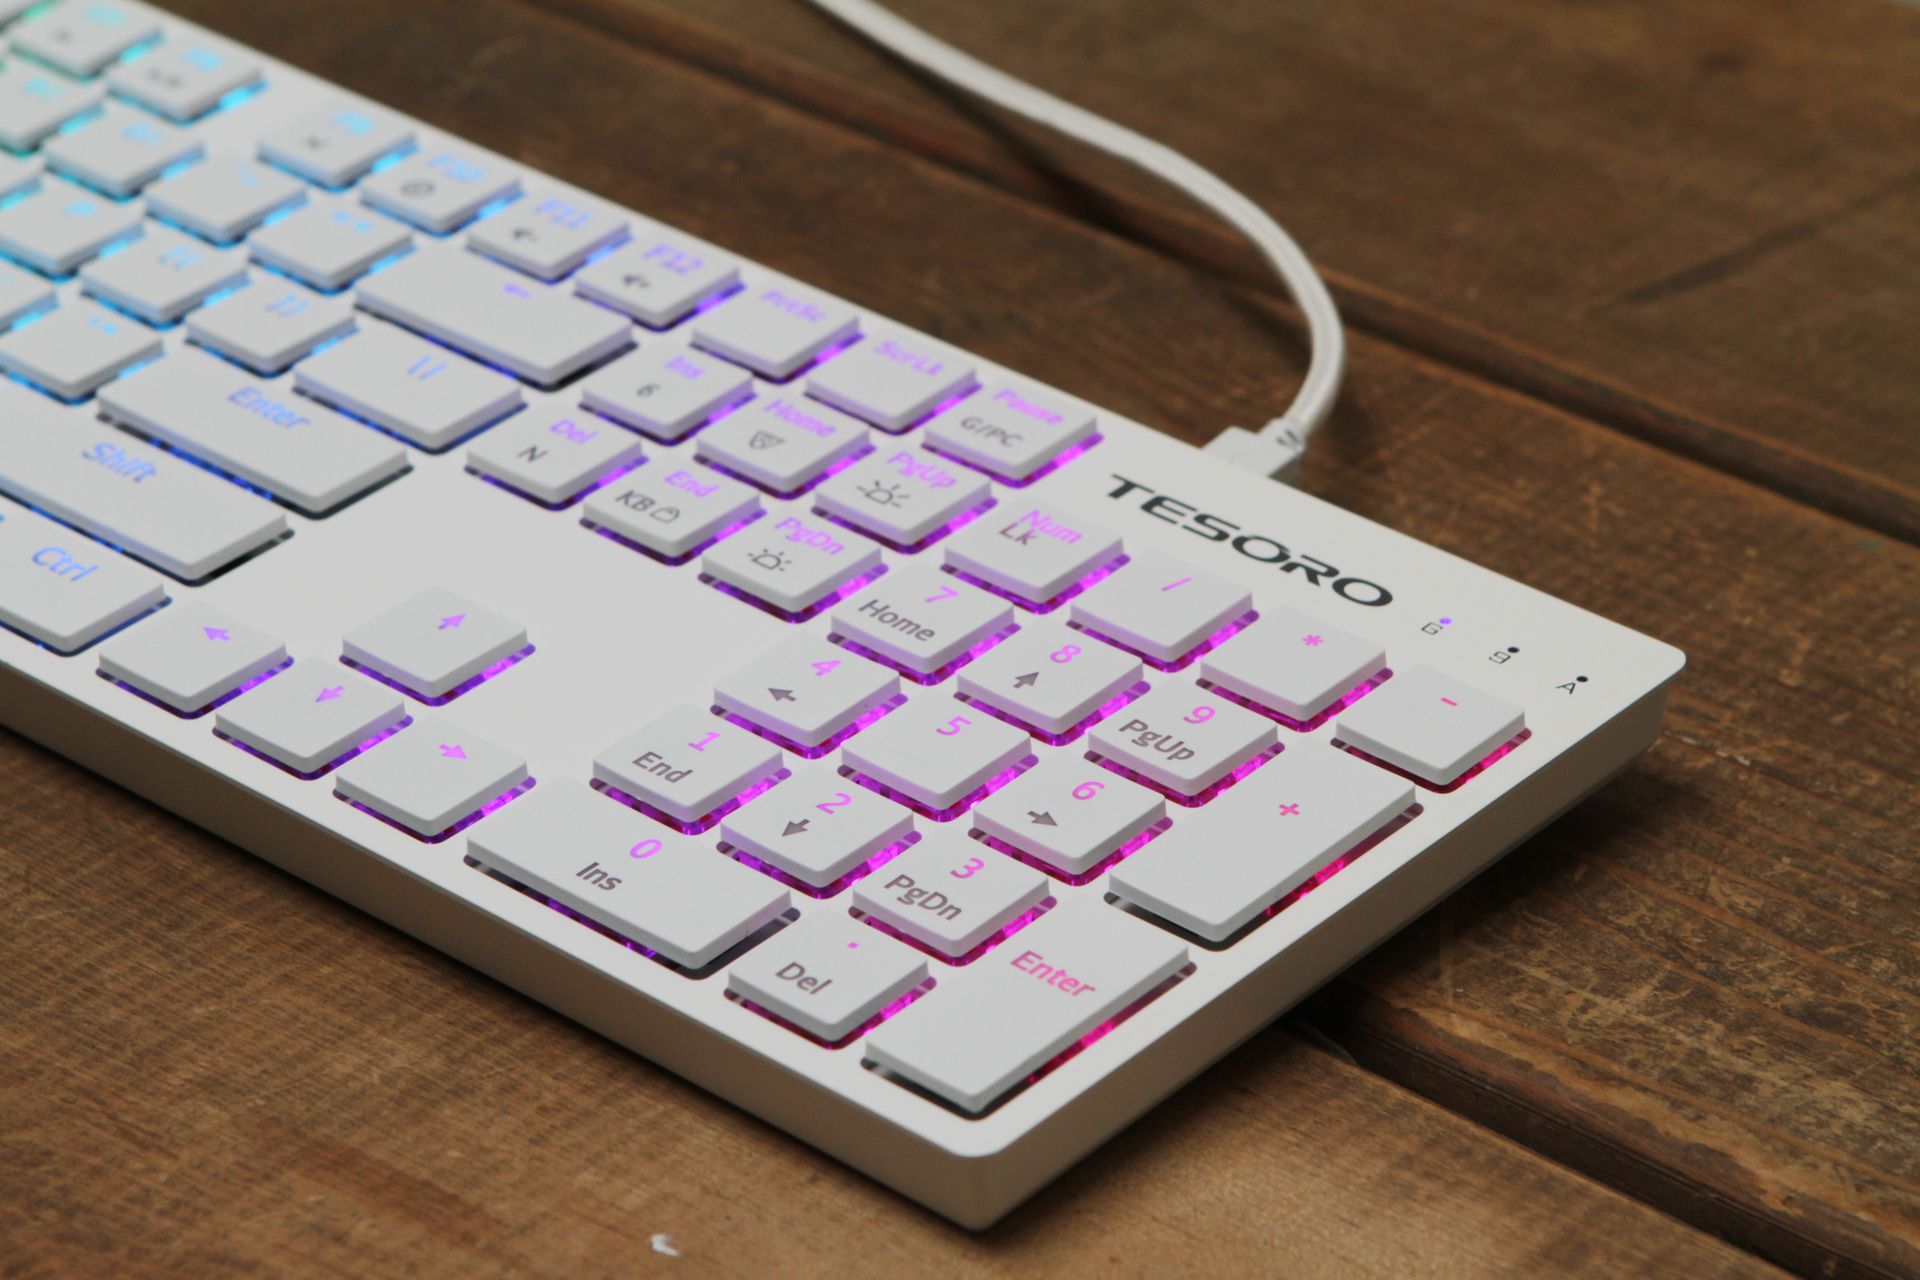 Dageraad Corrupt Portier Tesoro Gram XS Keyboard Review: Low-Profile Keys, Stunning White Design |  Tom's Hardware